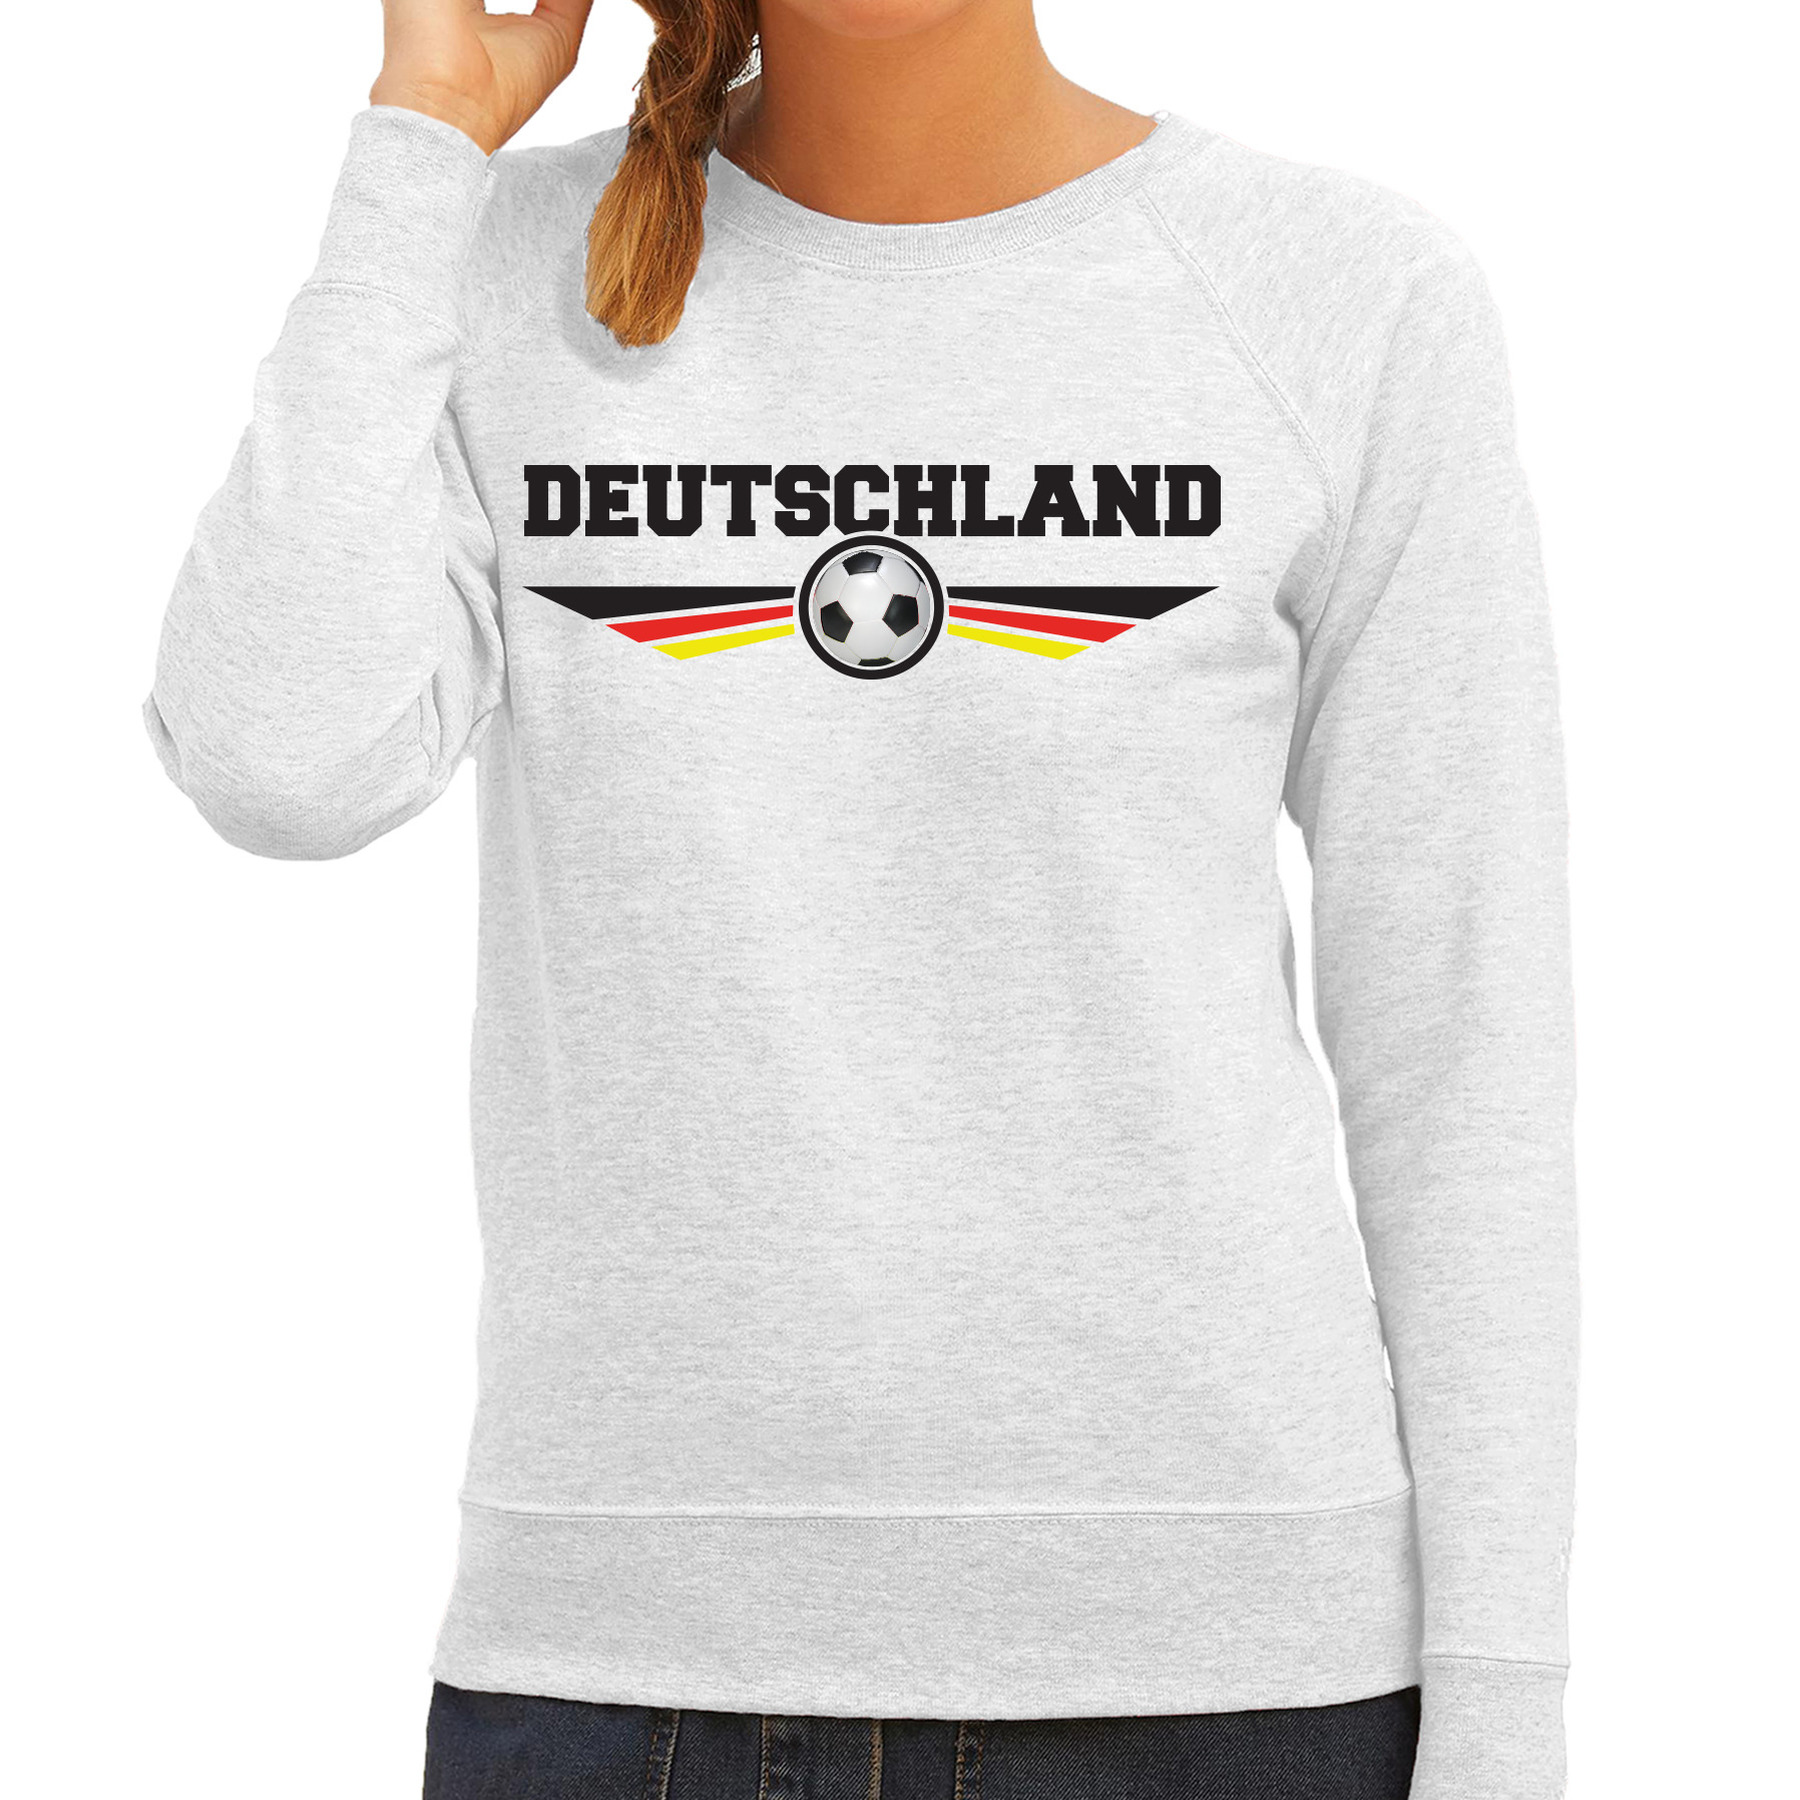 Duitsland-Deutschland landen-voetbal sweater grijs dames